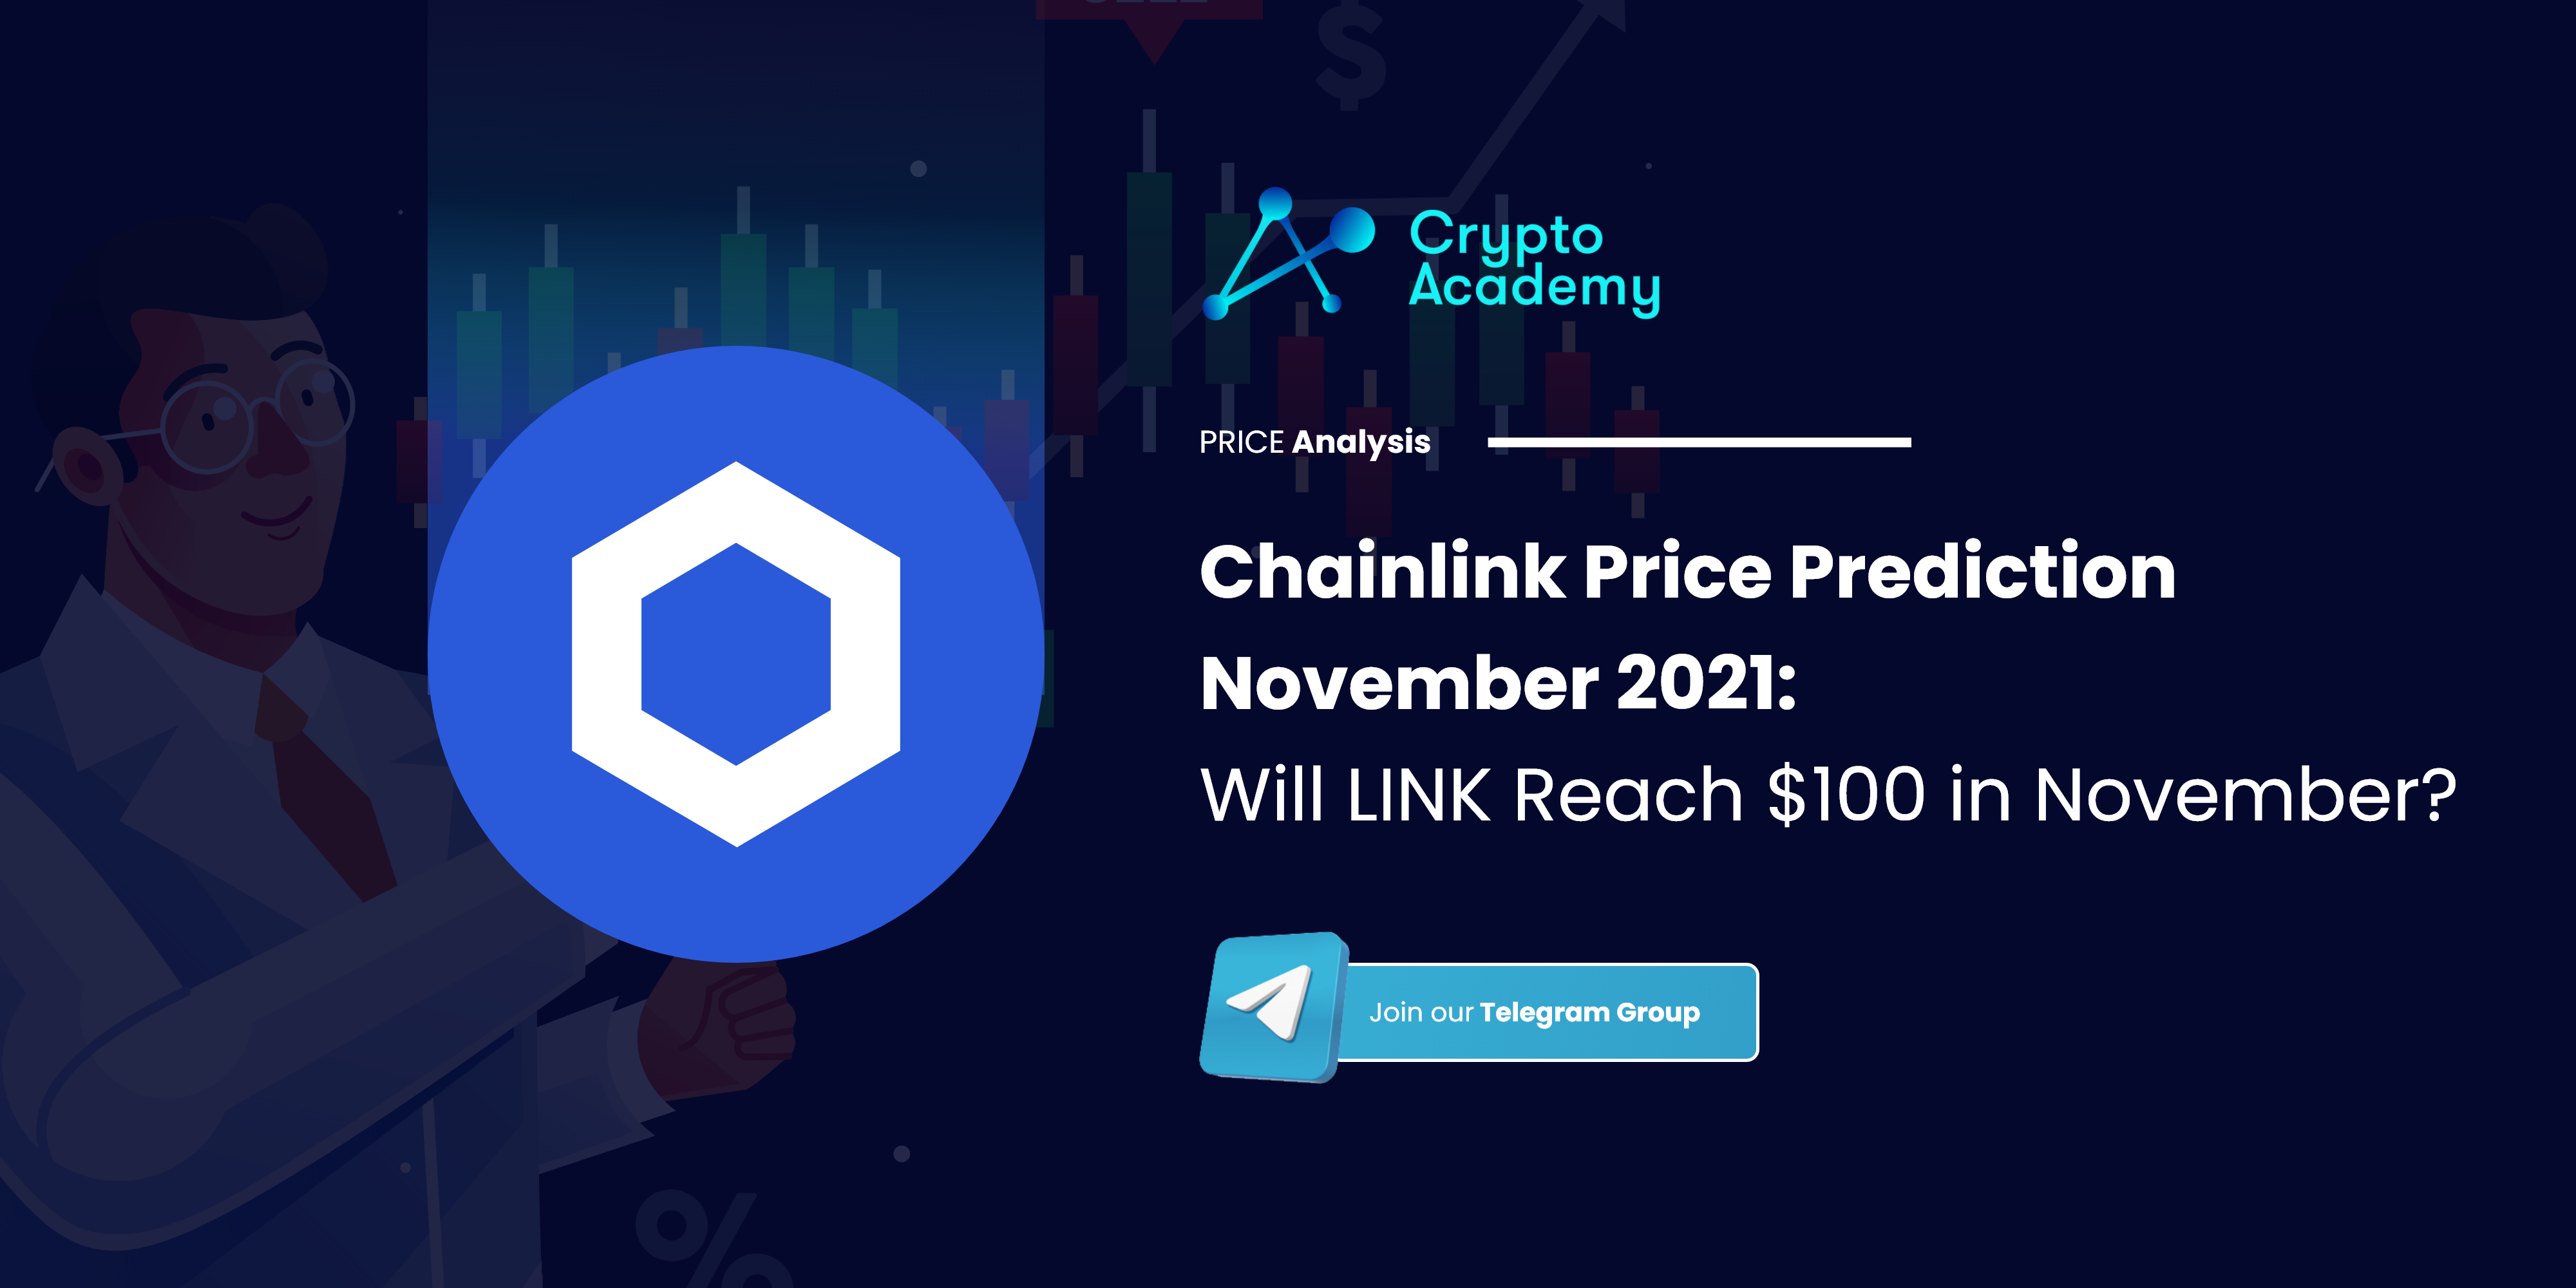 Chainlink Price Prediction November 2021: Will LINK Reach $100?